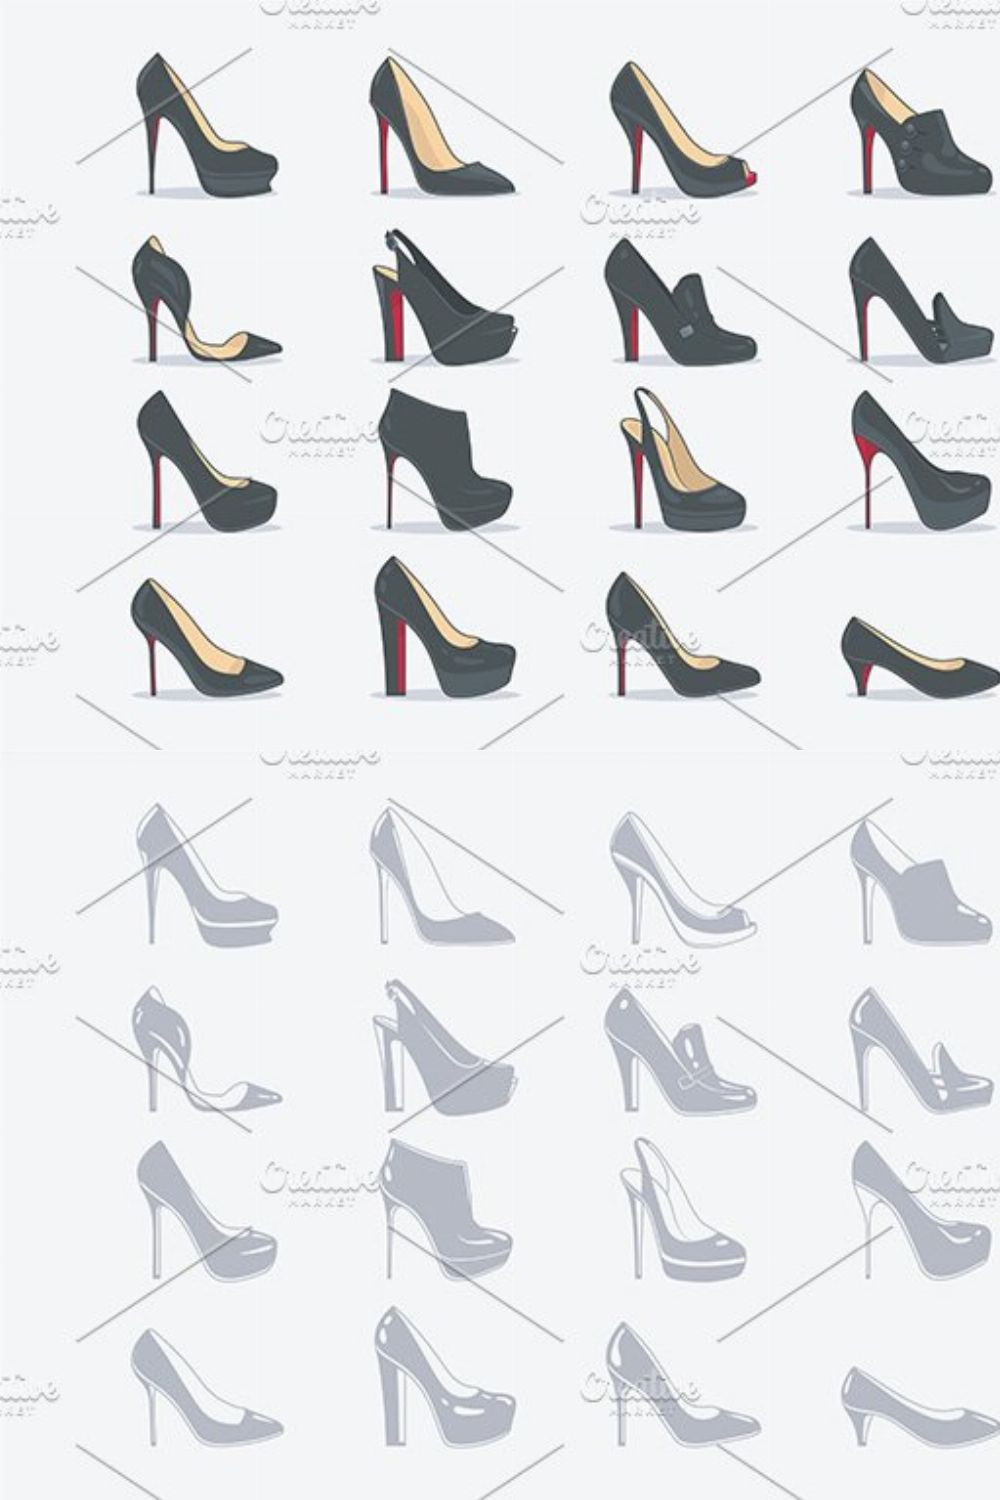 Shoes Set + pattern pinterest preview image.